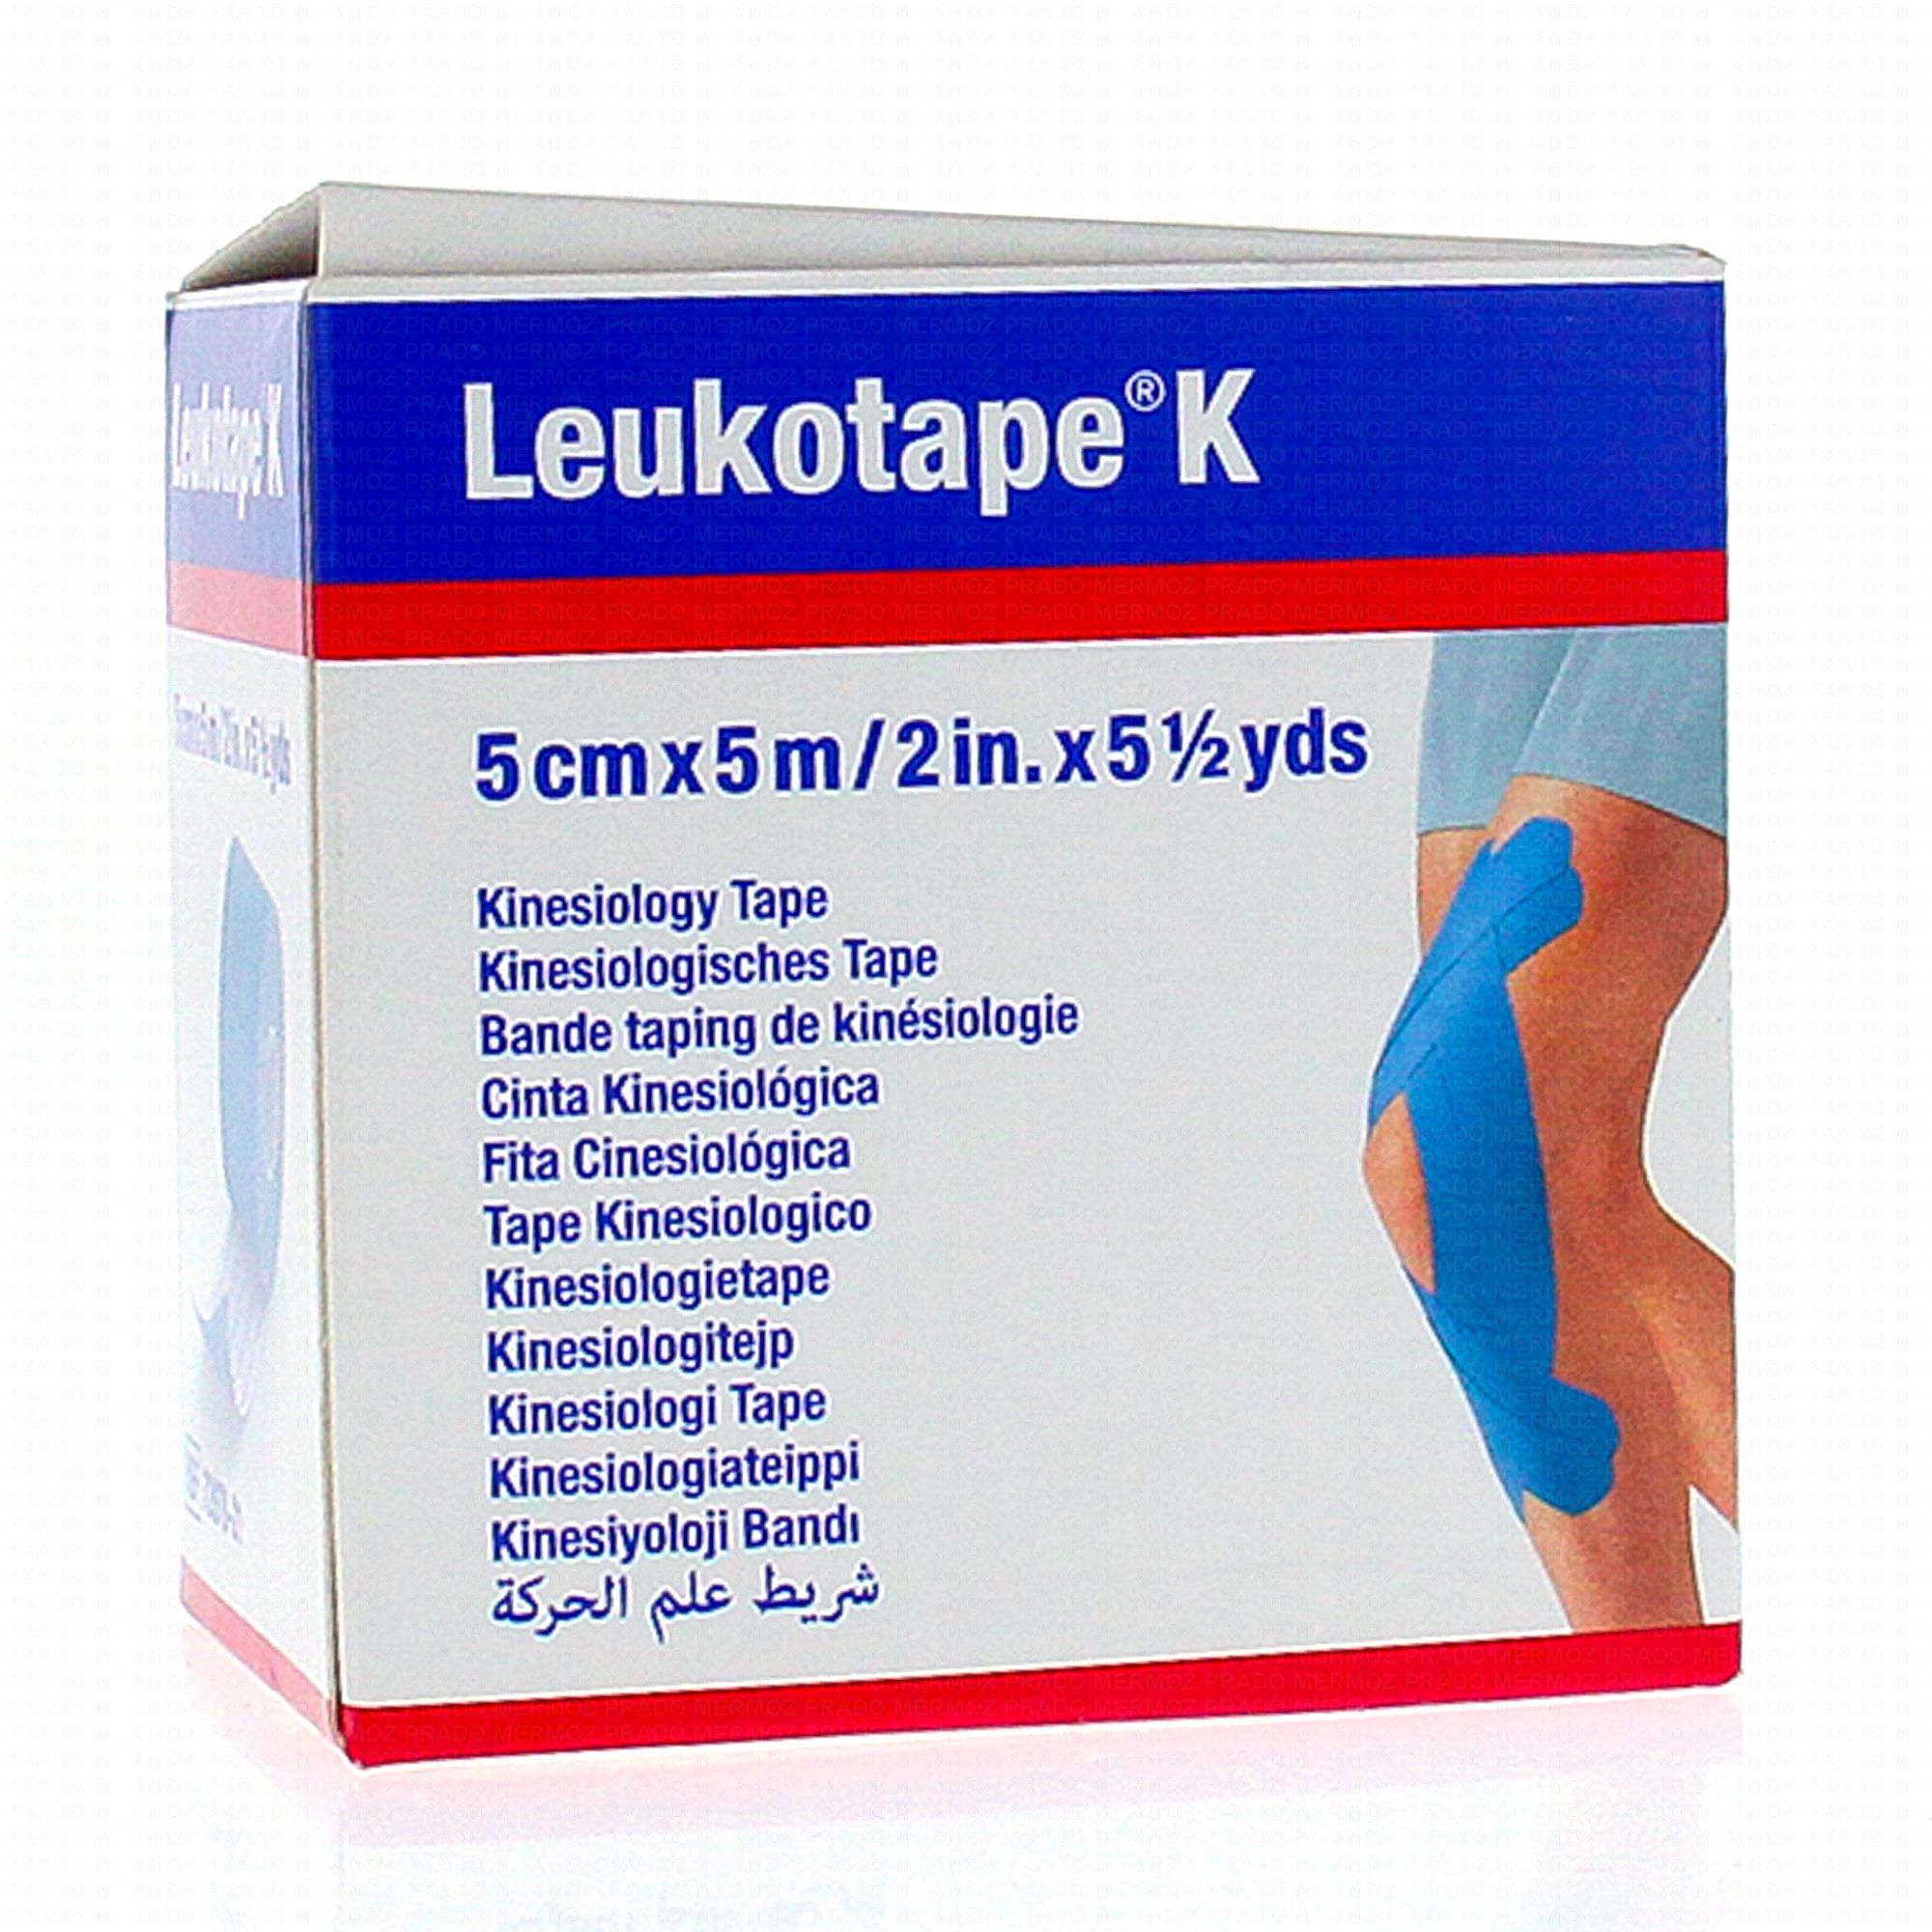 BSN MEDICAL Leukotape k - Bande taping de kinéologie 5cm x 5m